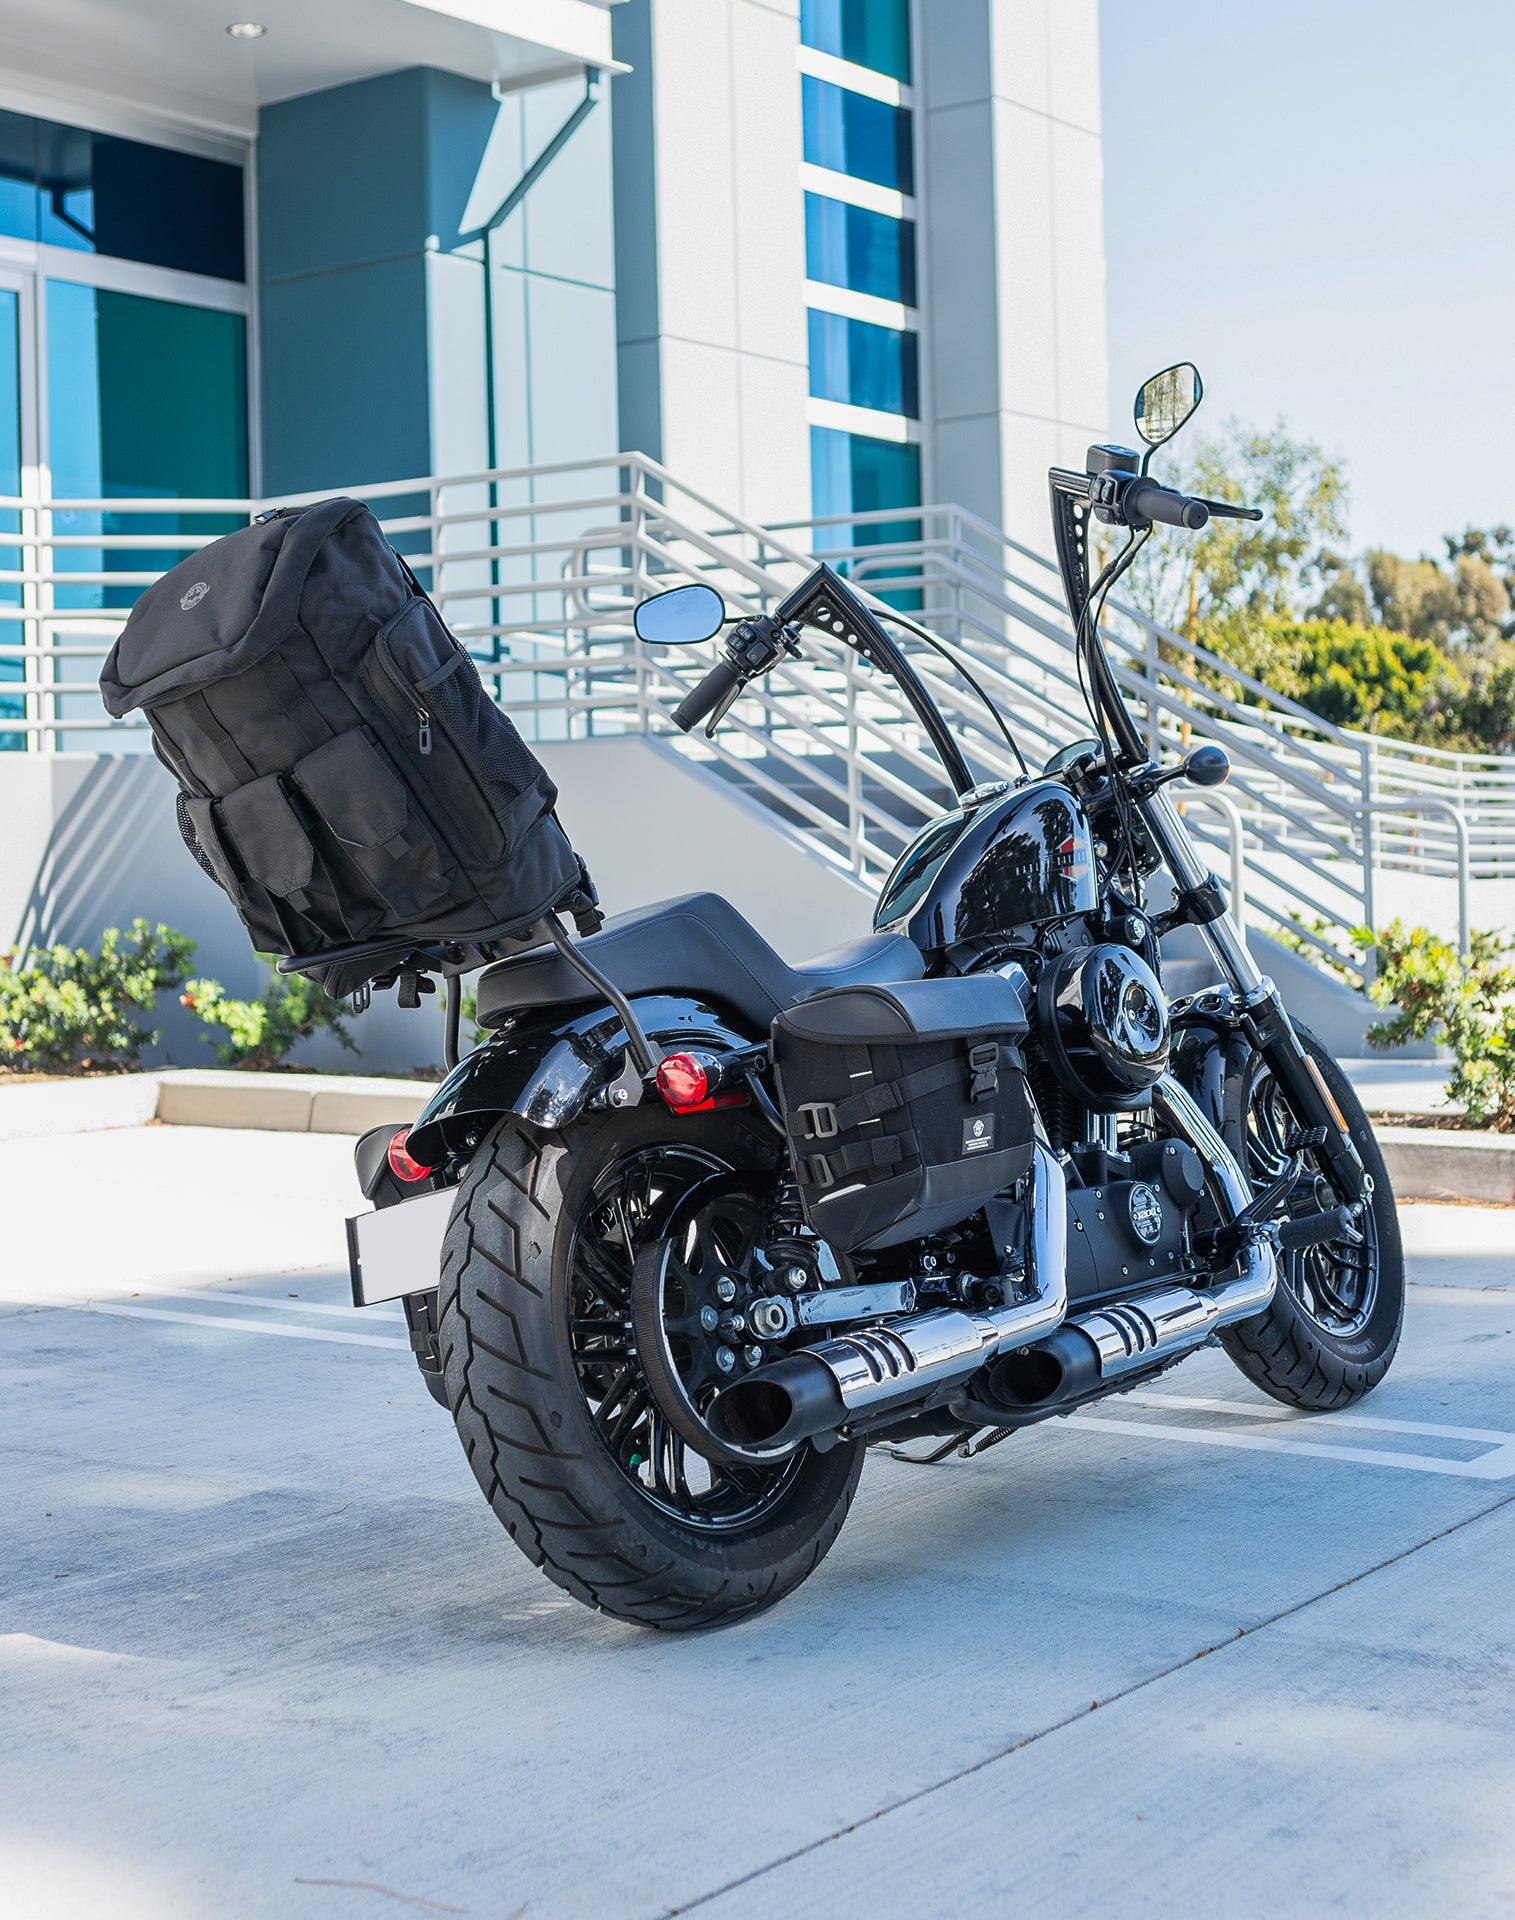 32L - Trident Large Motorcycle Tail Bag for Harley Davidson